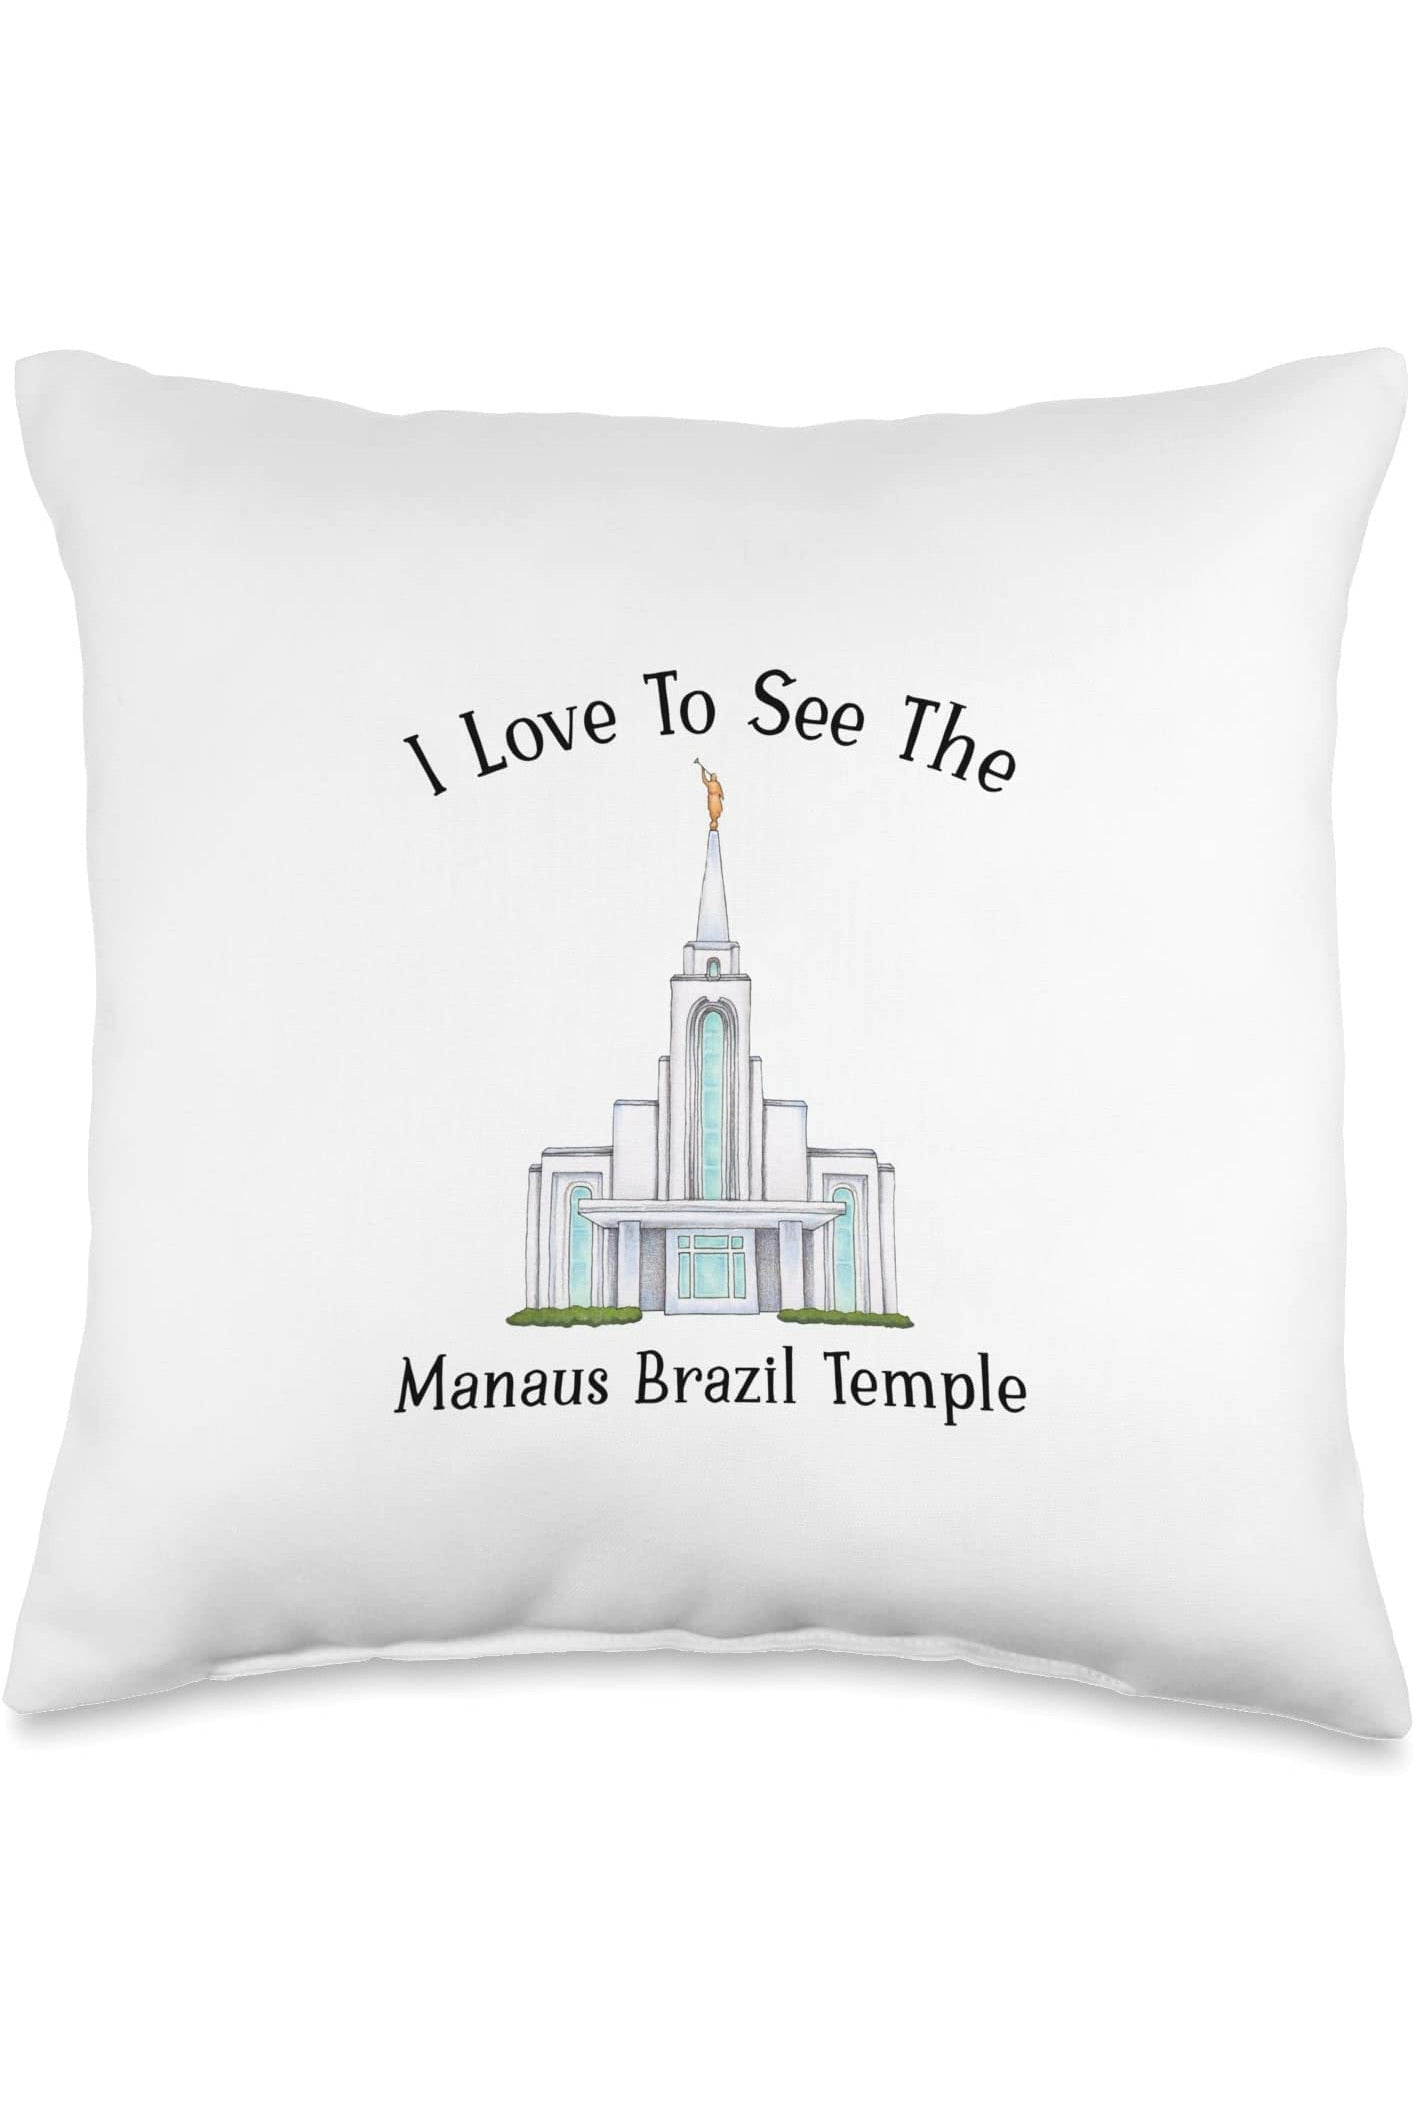 Manaus Brazil Temple Throw Pillows - Happy Style (English) US